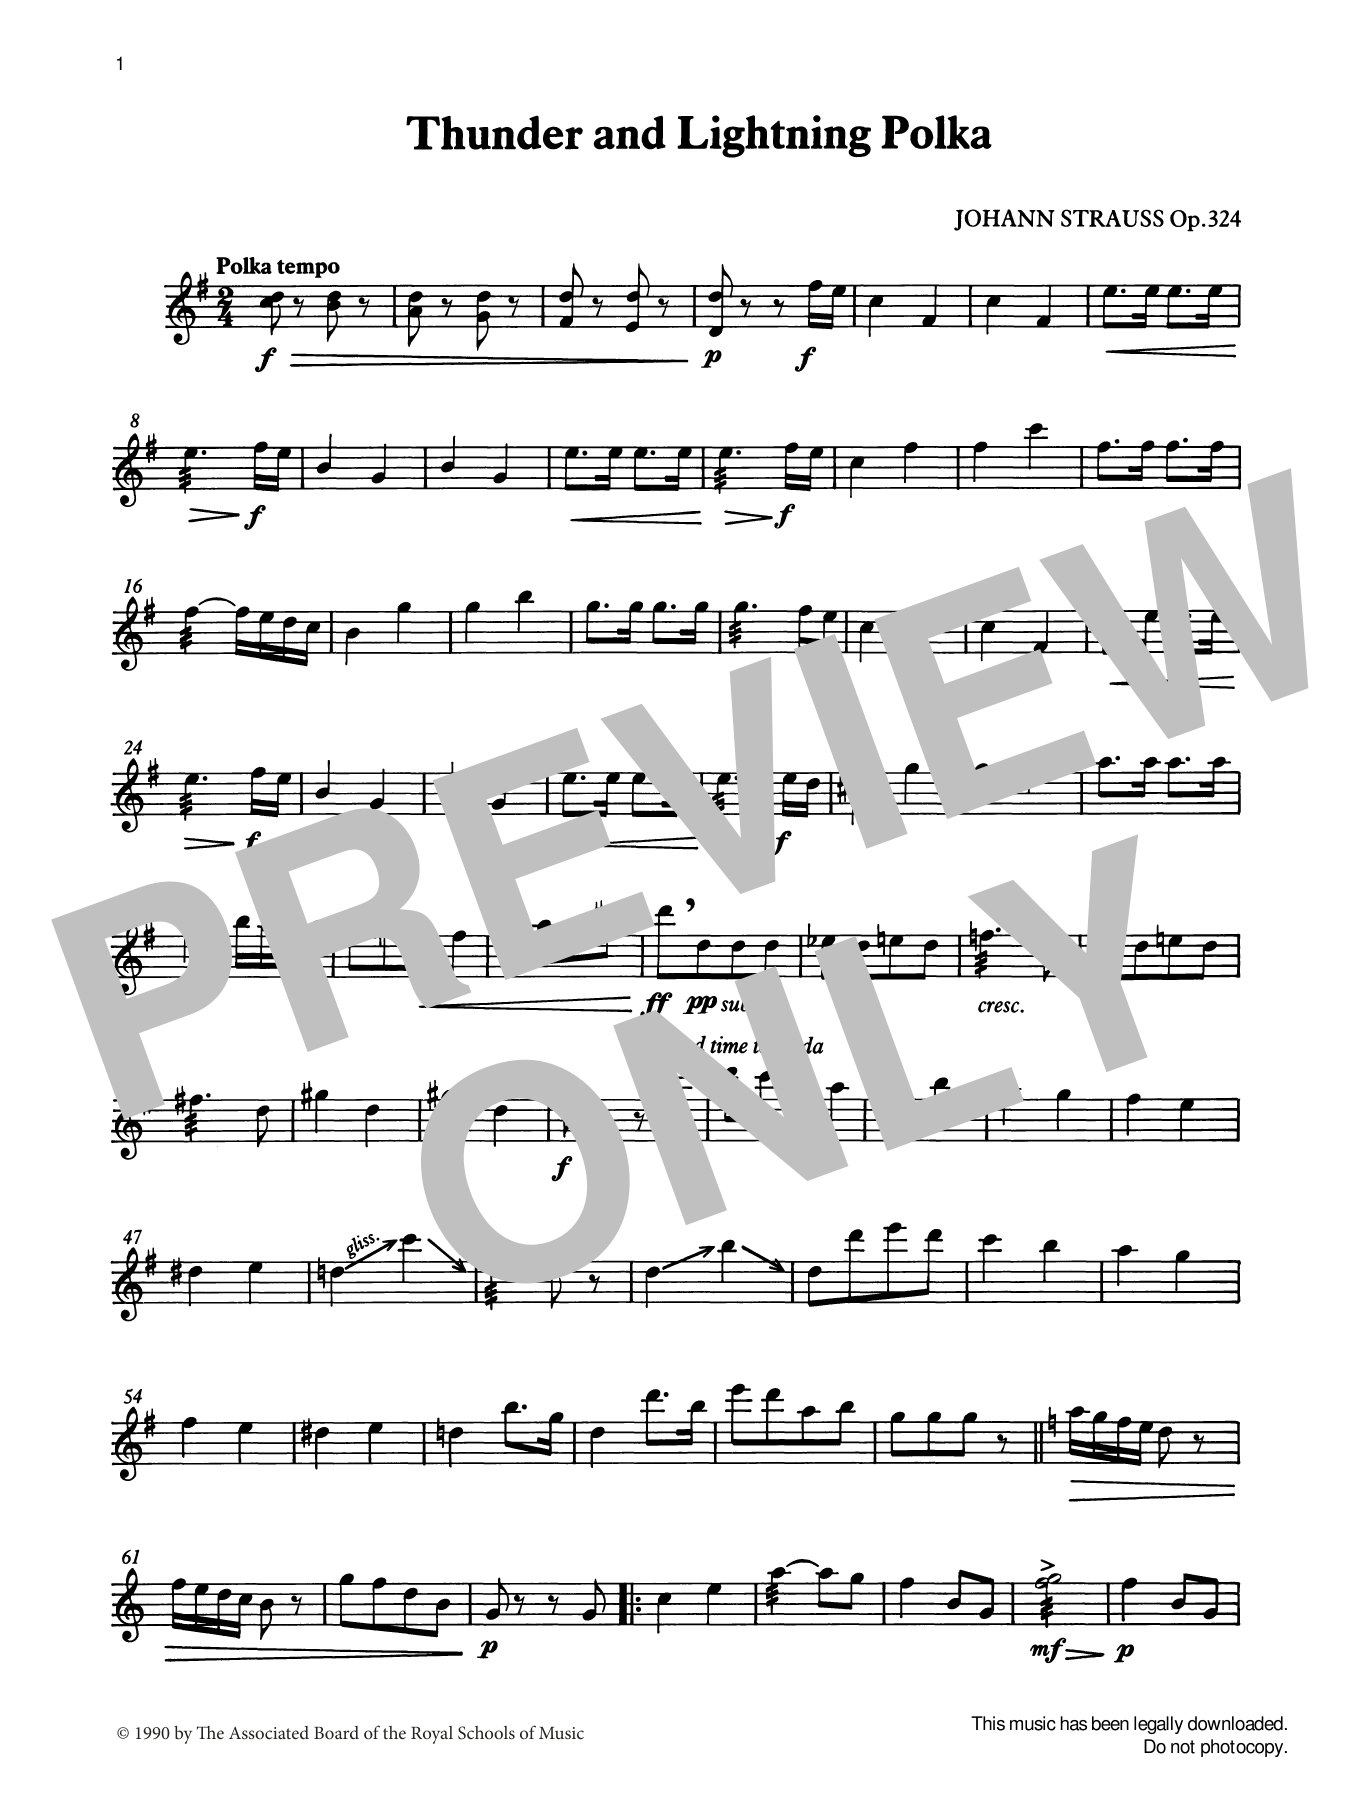 Download Johann Strauss II Thunder and Lightning Polka from Graded Sheet Music